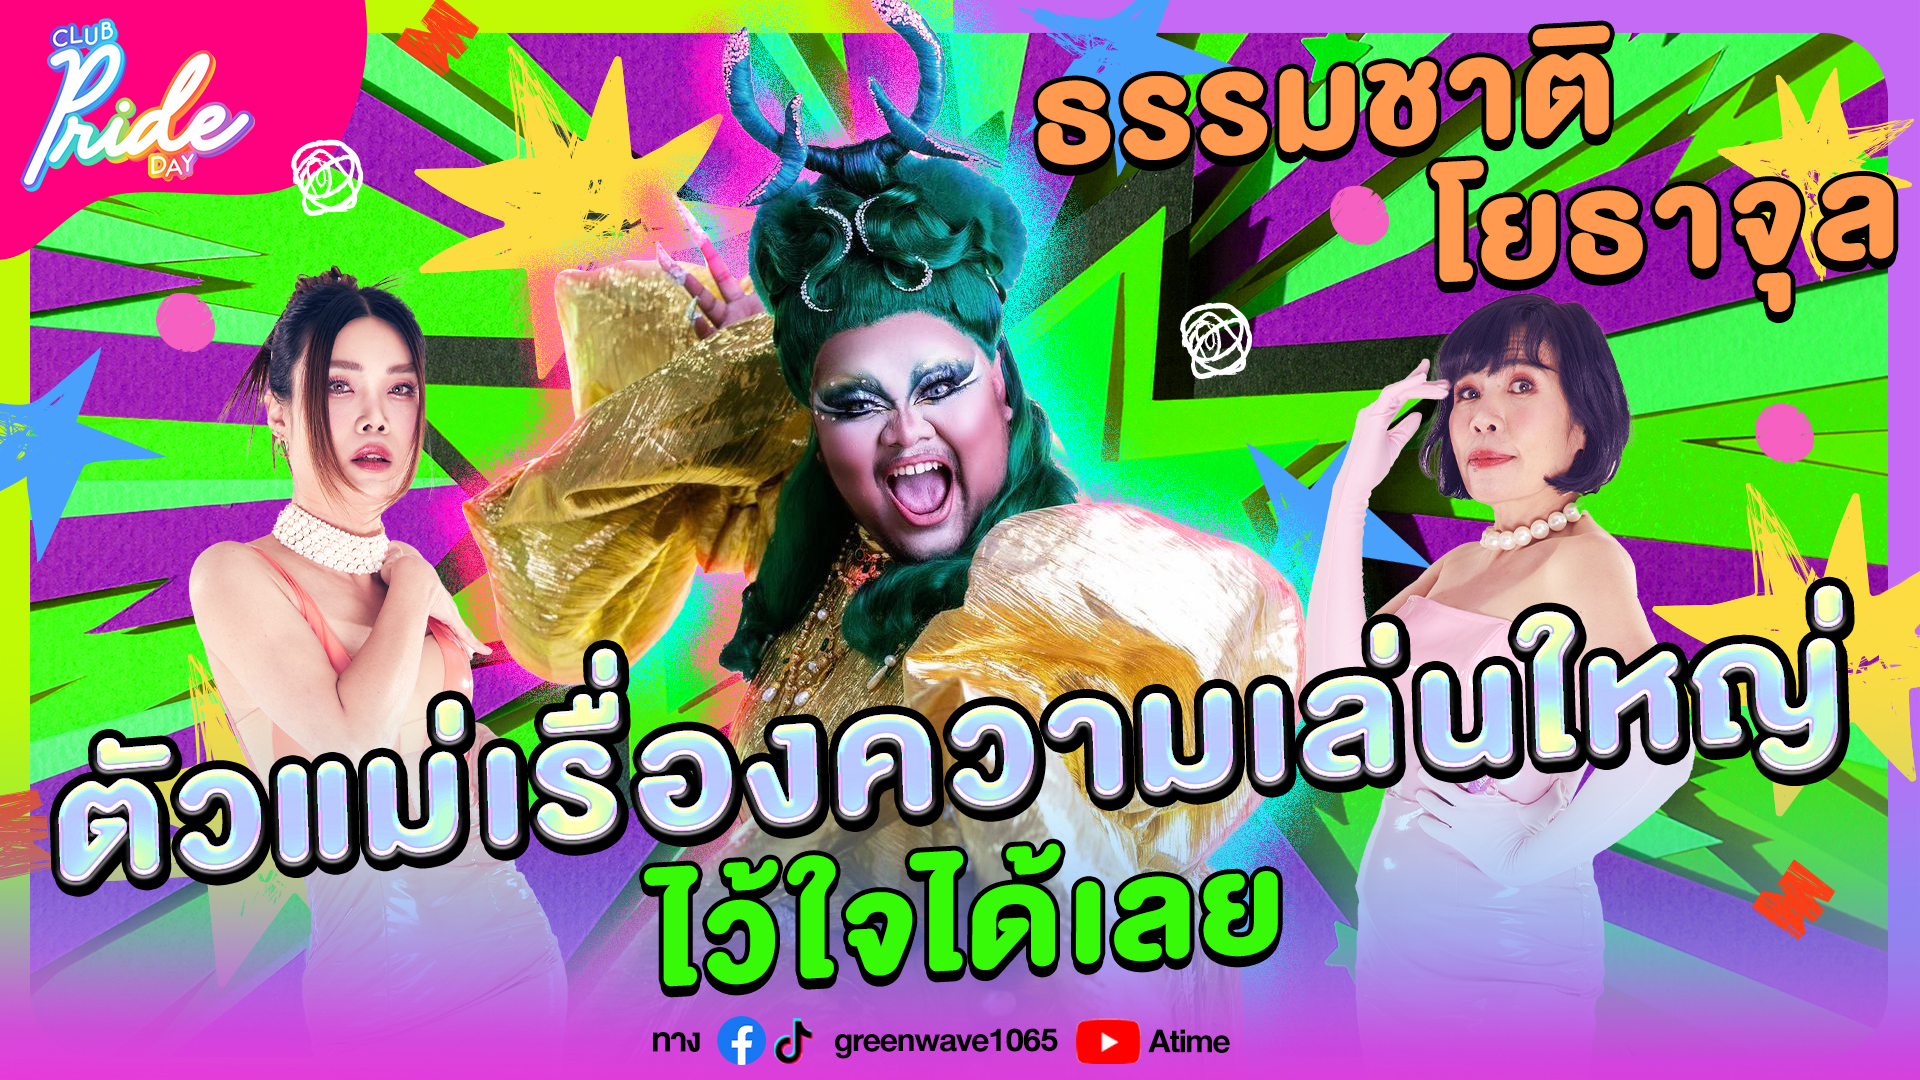 Club Pride Day x ธรรมชาติ โยธาจุล | 9 พ.ย. 66